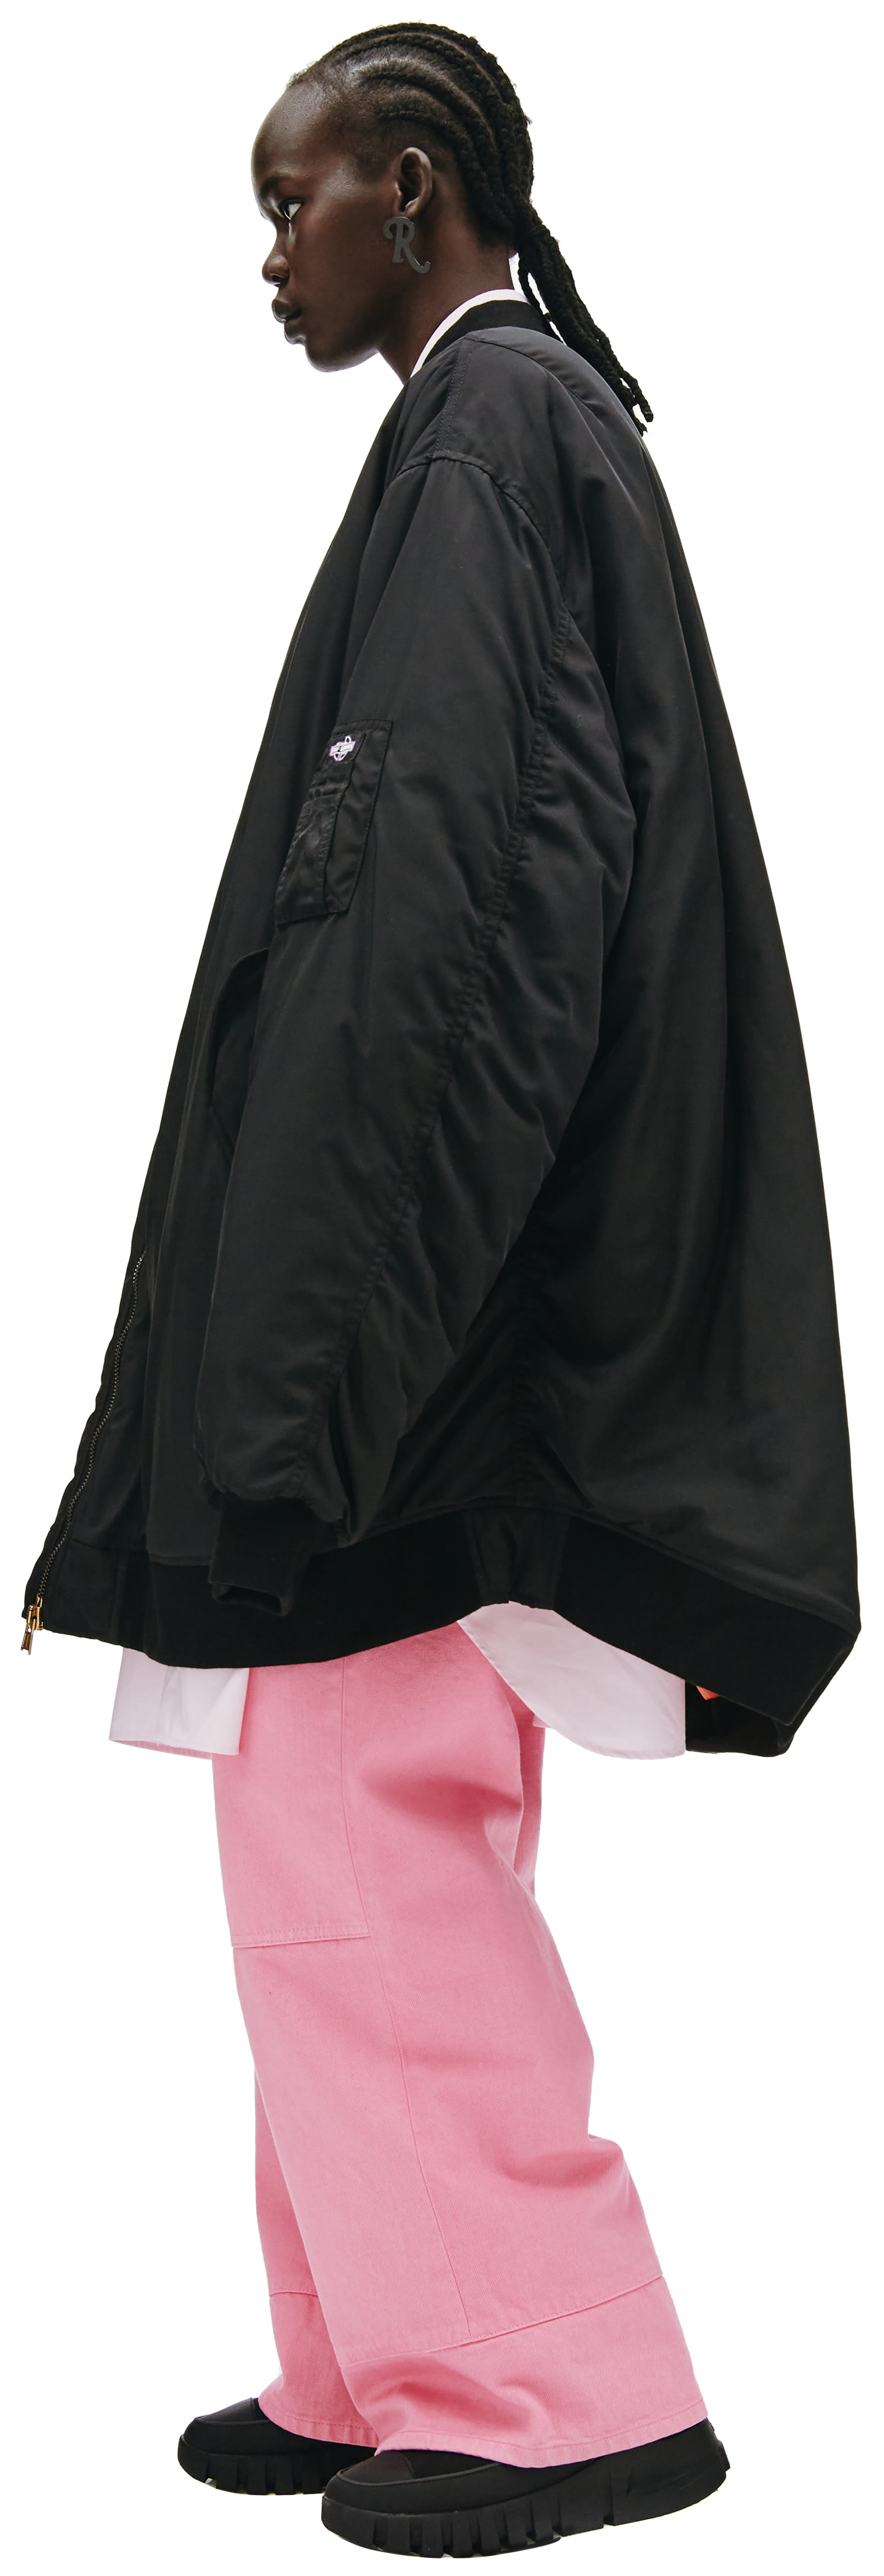 Raf Simons Equanimity bomber jacket in black